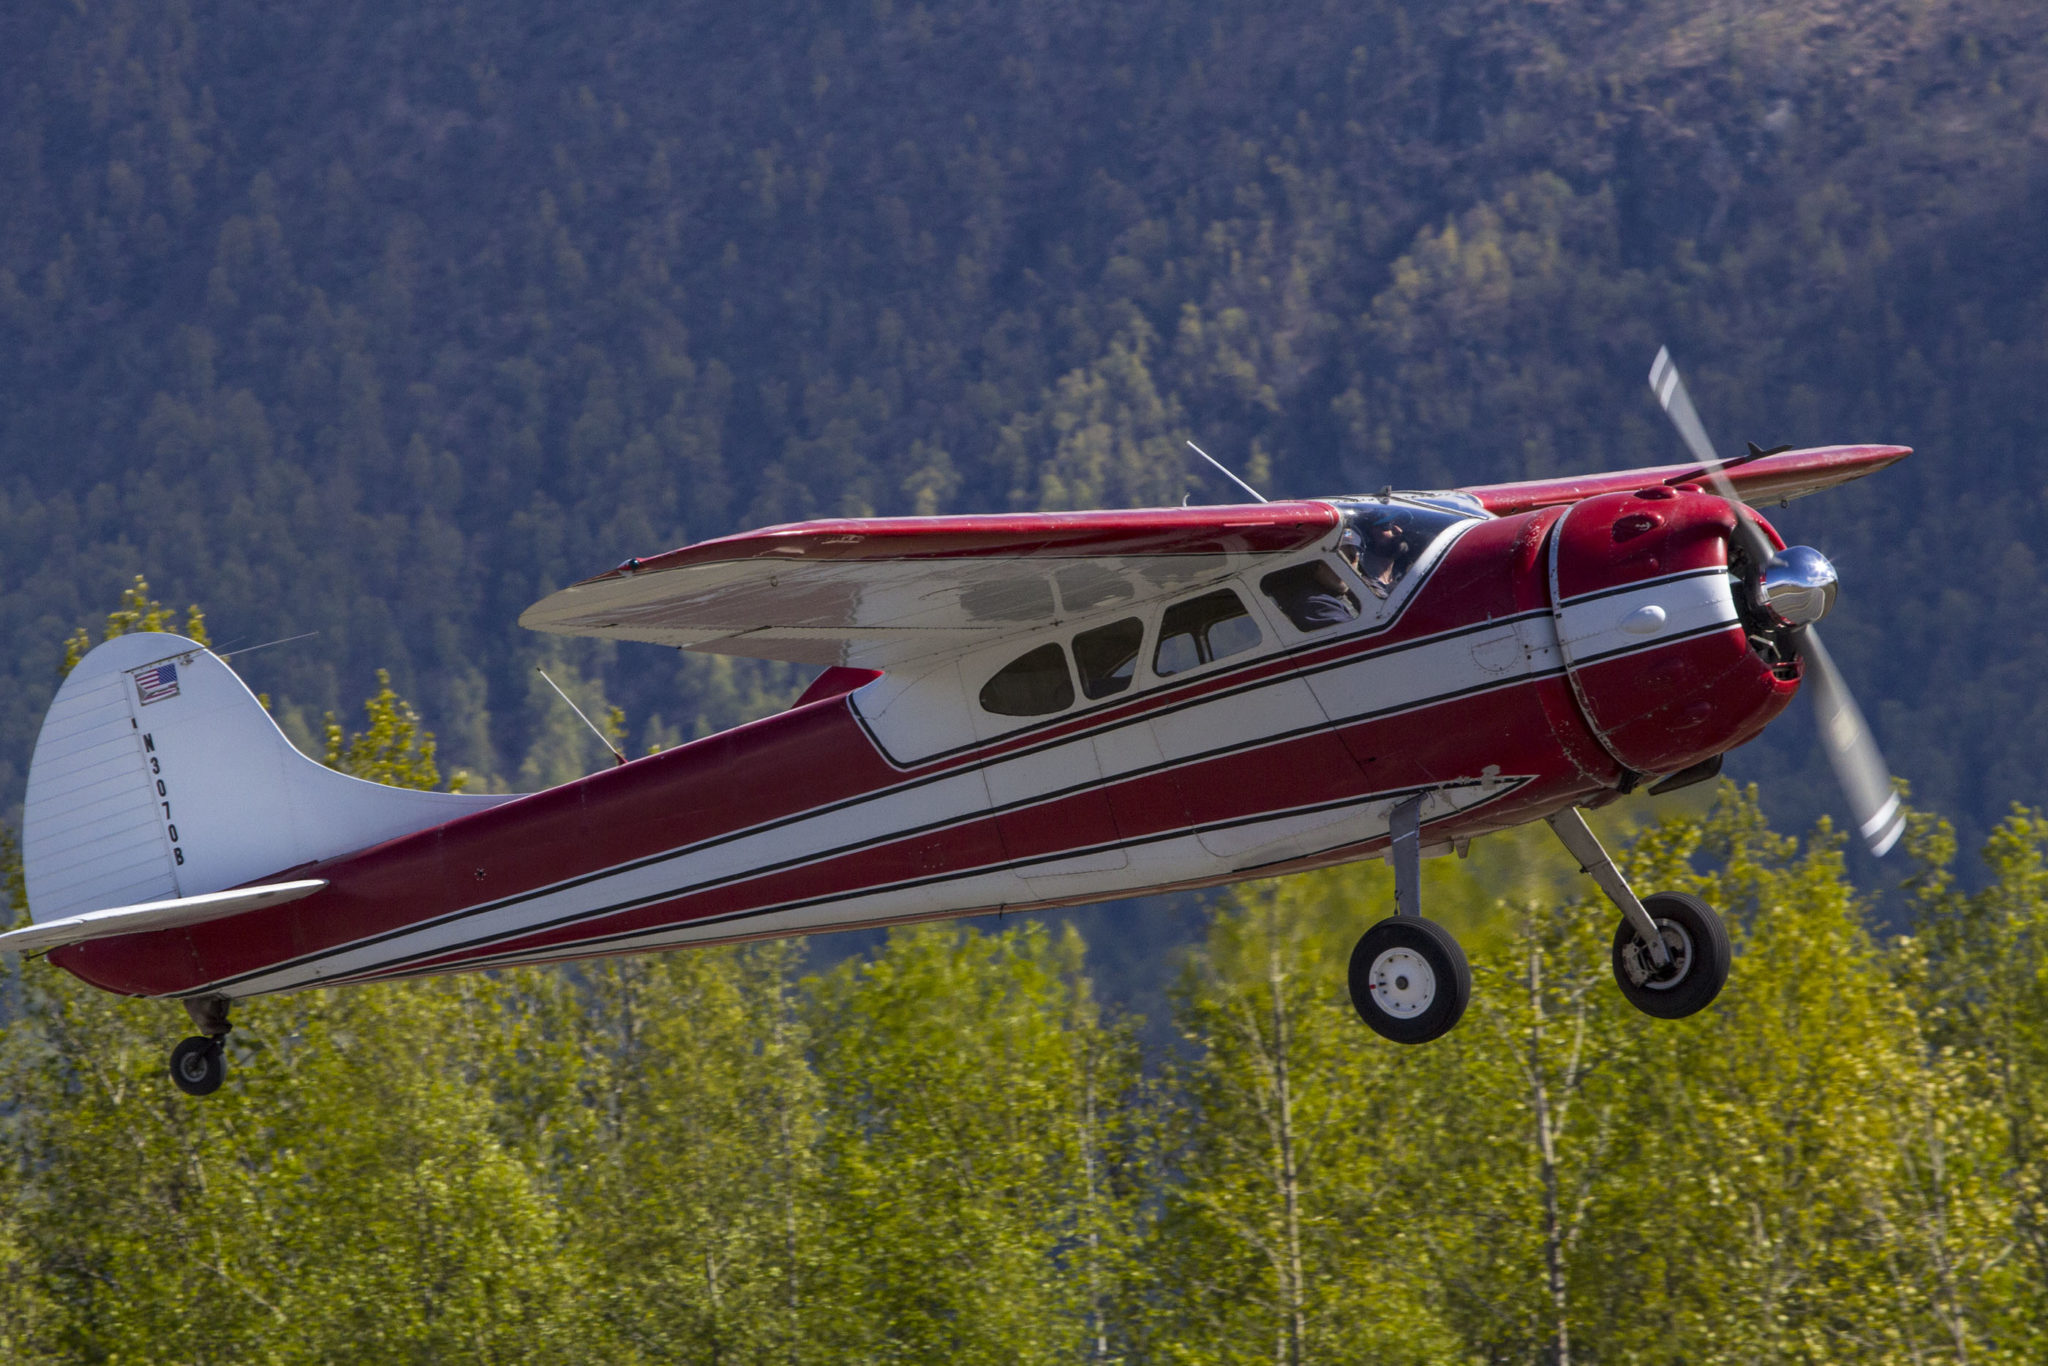 Best Aircraft photography of Alaska | Alaskafoto - Aircraft portraits, Alaska photography